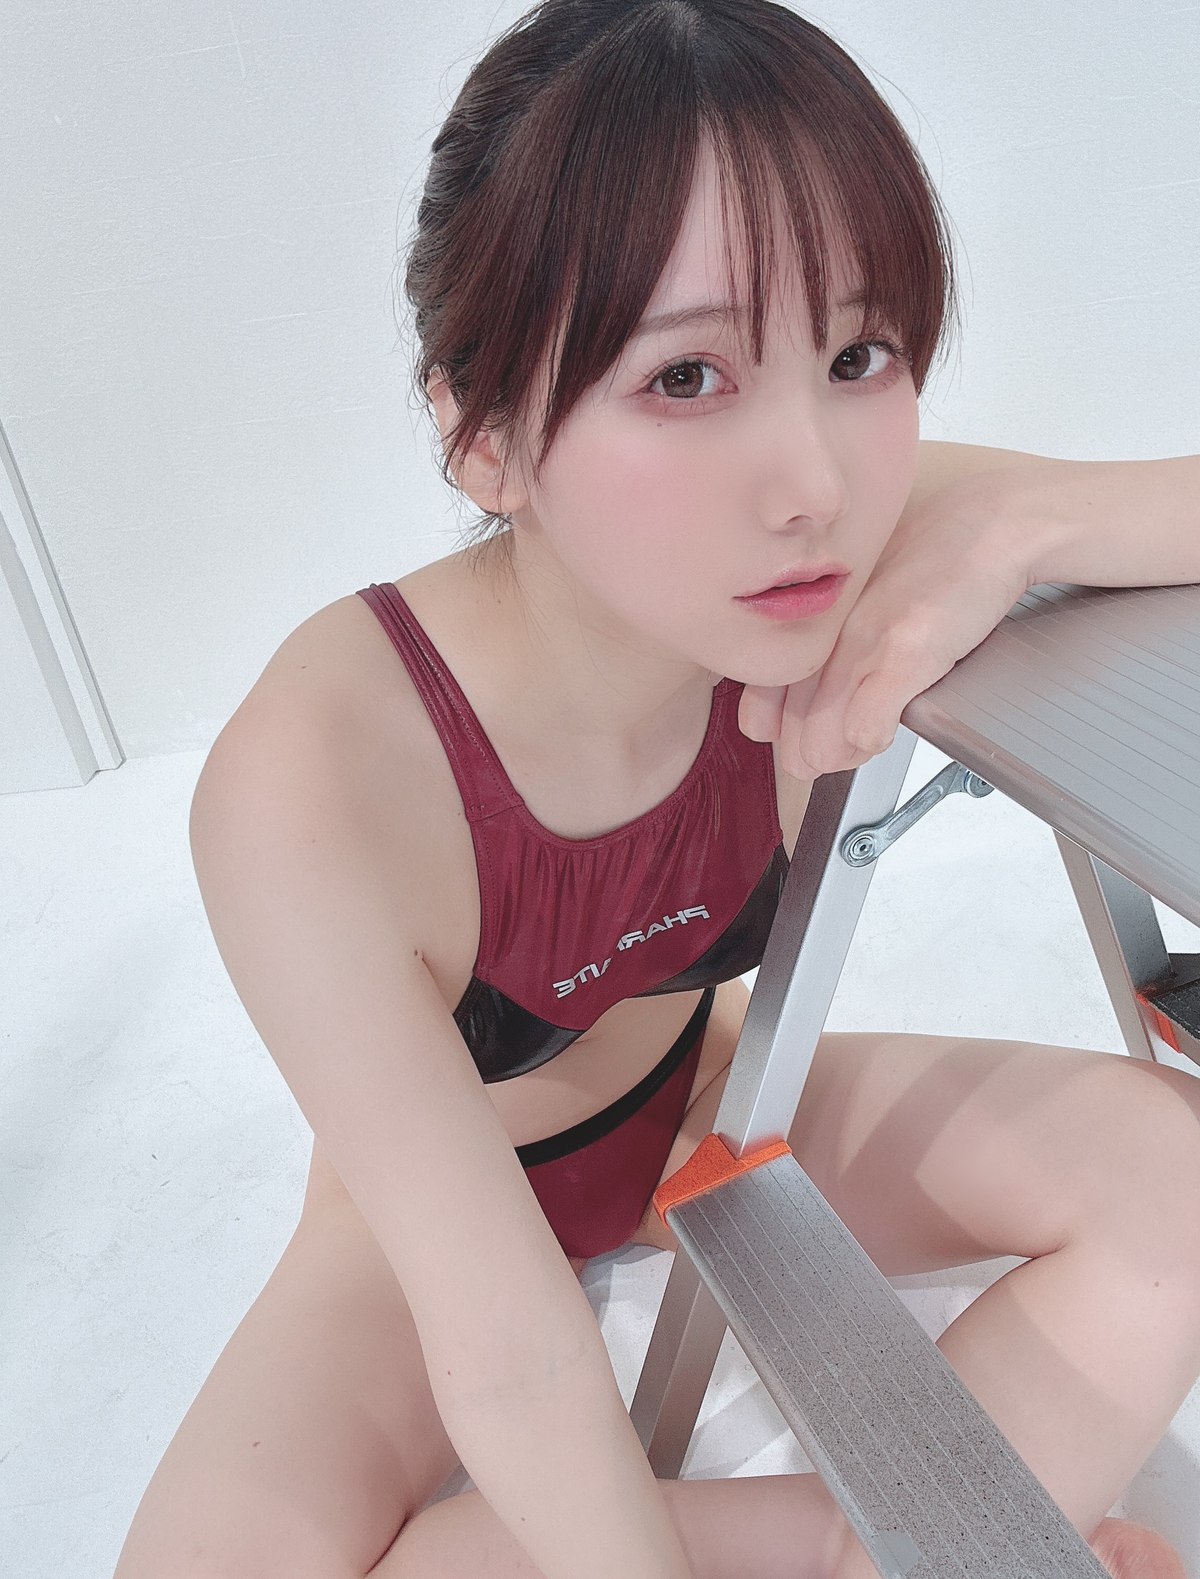 Fantia けんけん Swimming Race Swimsuit With Side Milk 0020 4839875676.jpg